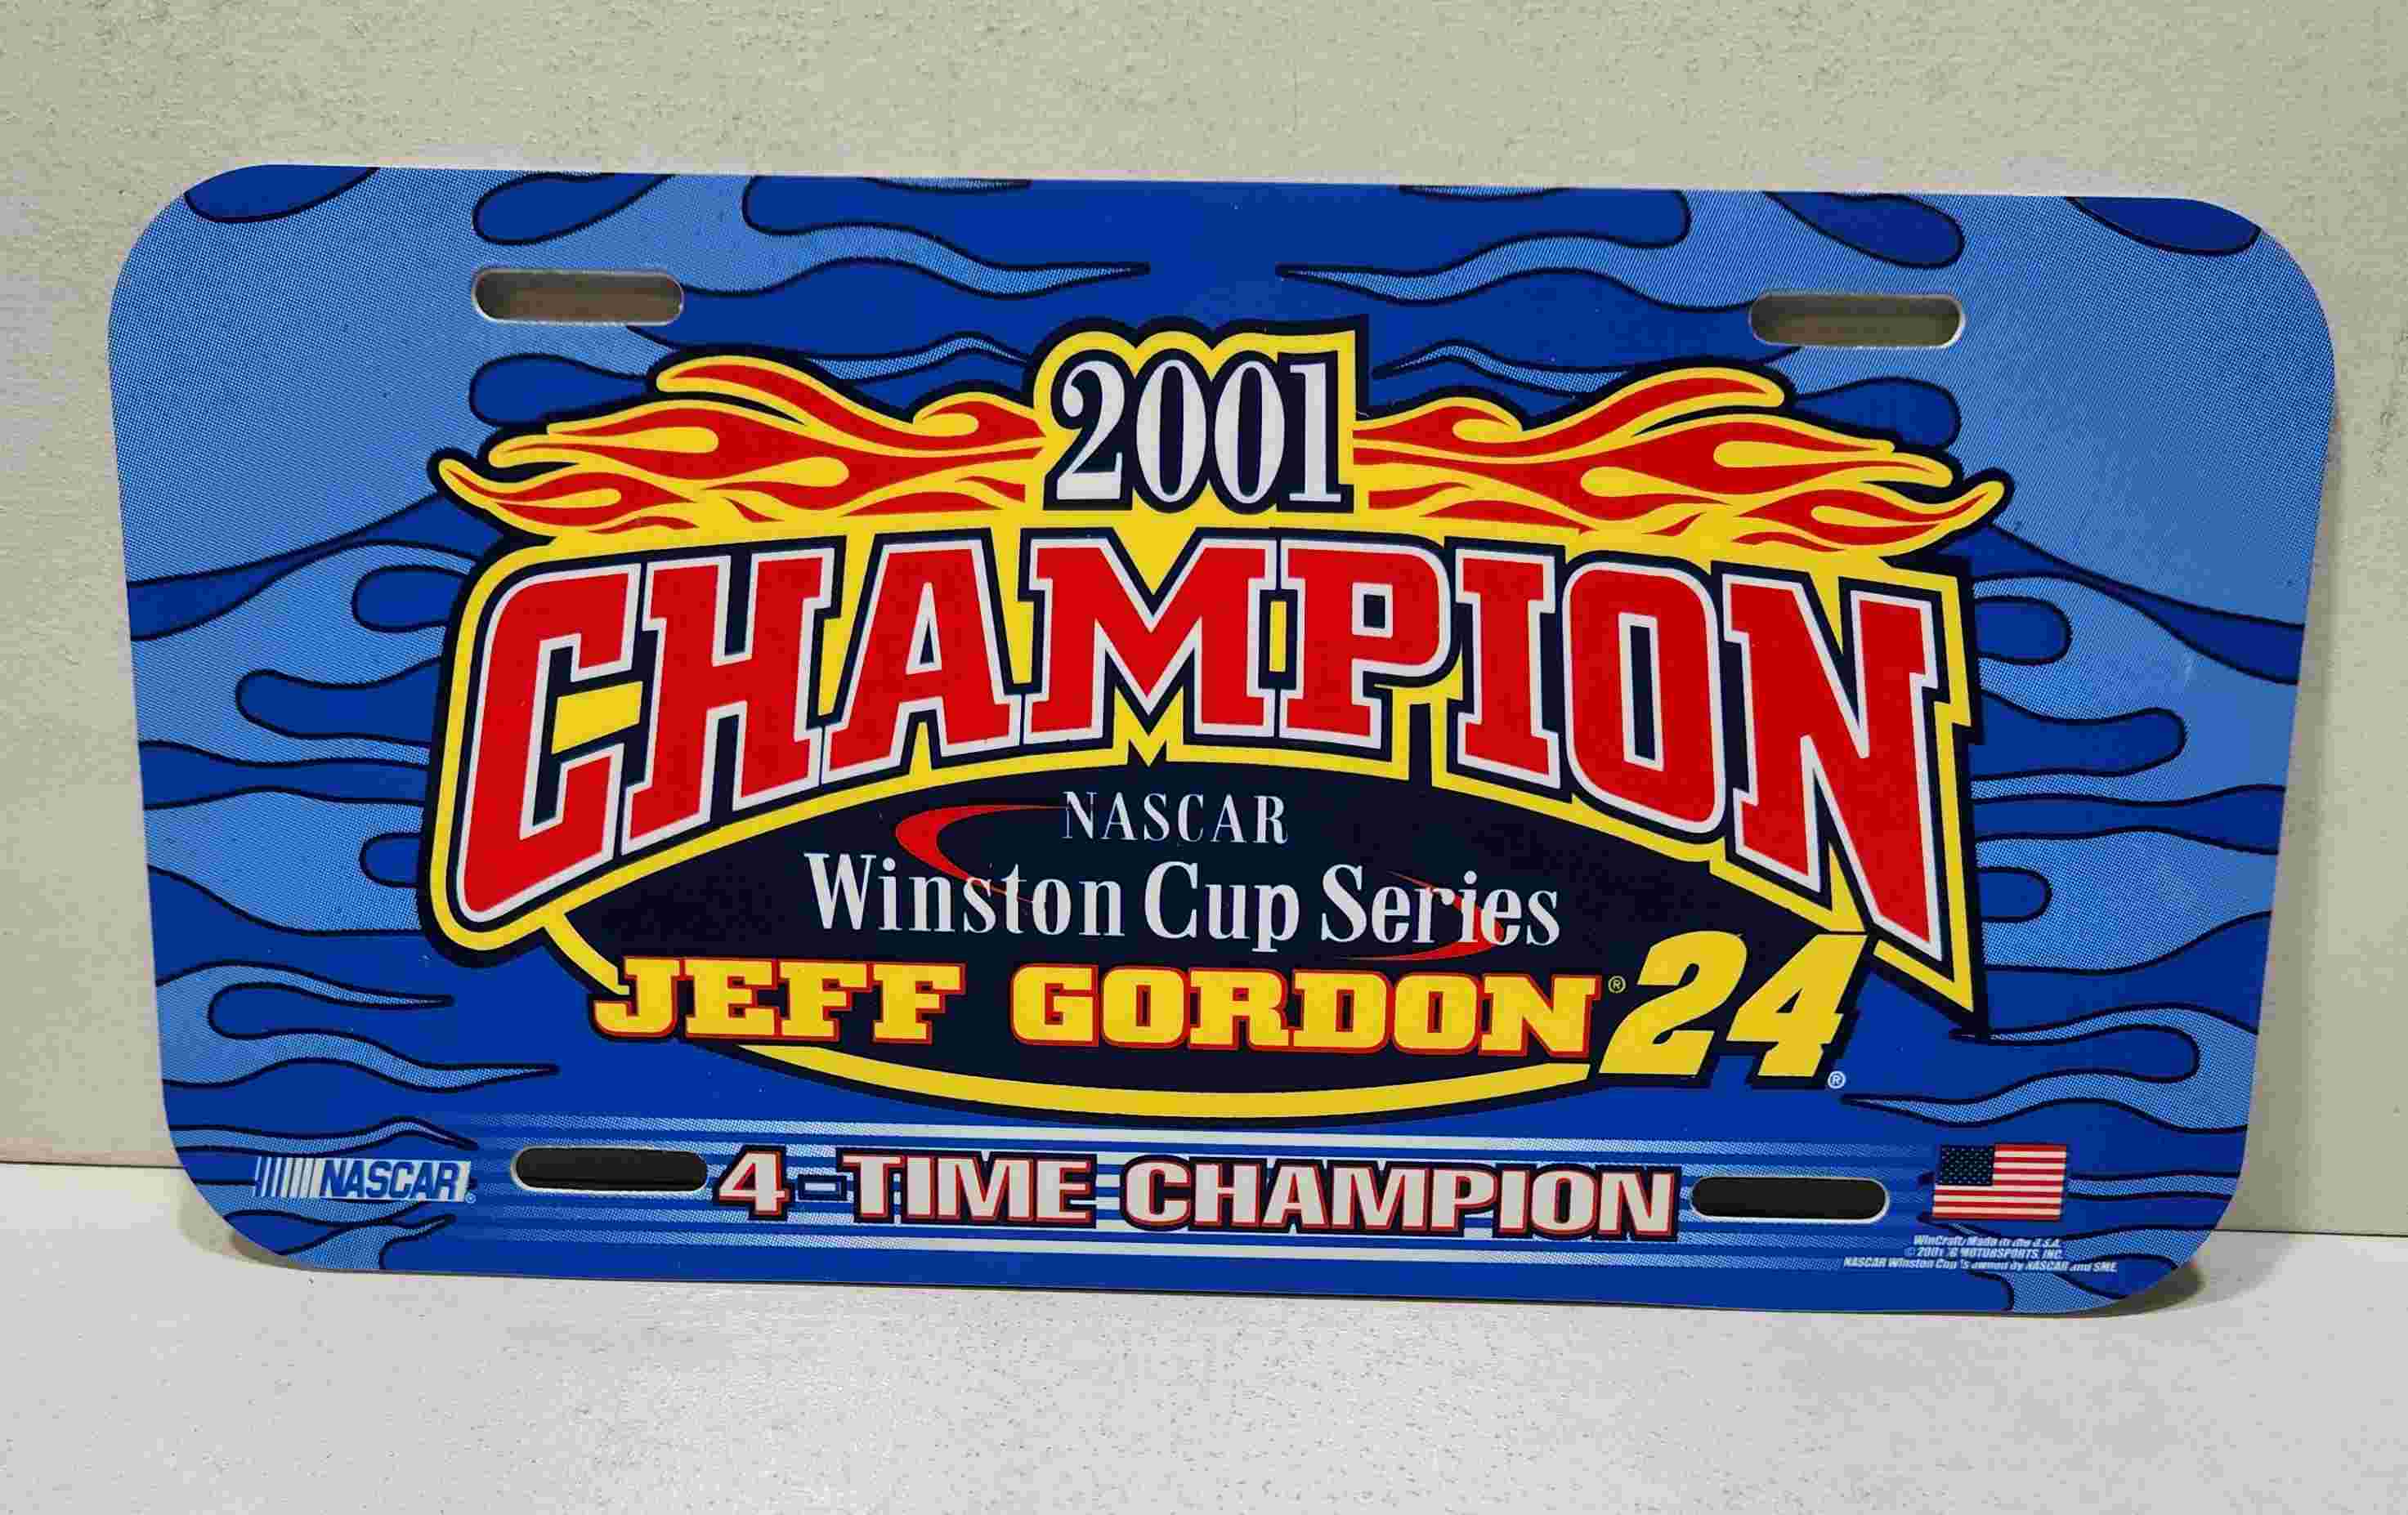 2001 Jeff Gordon "4 Time" "Winston Cup Champion" plastic license plate